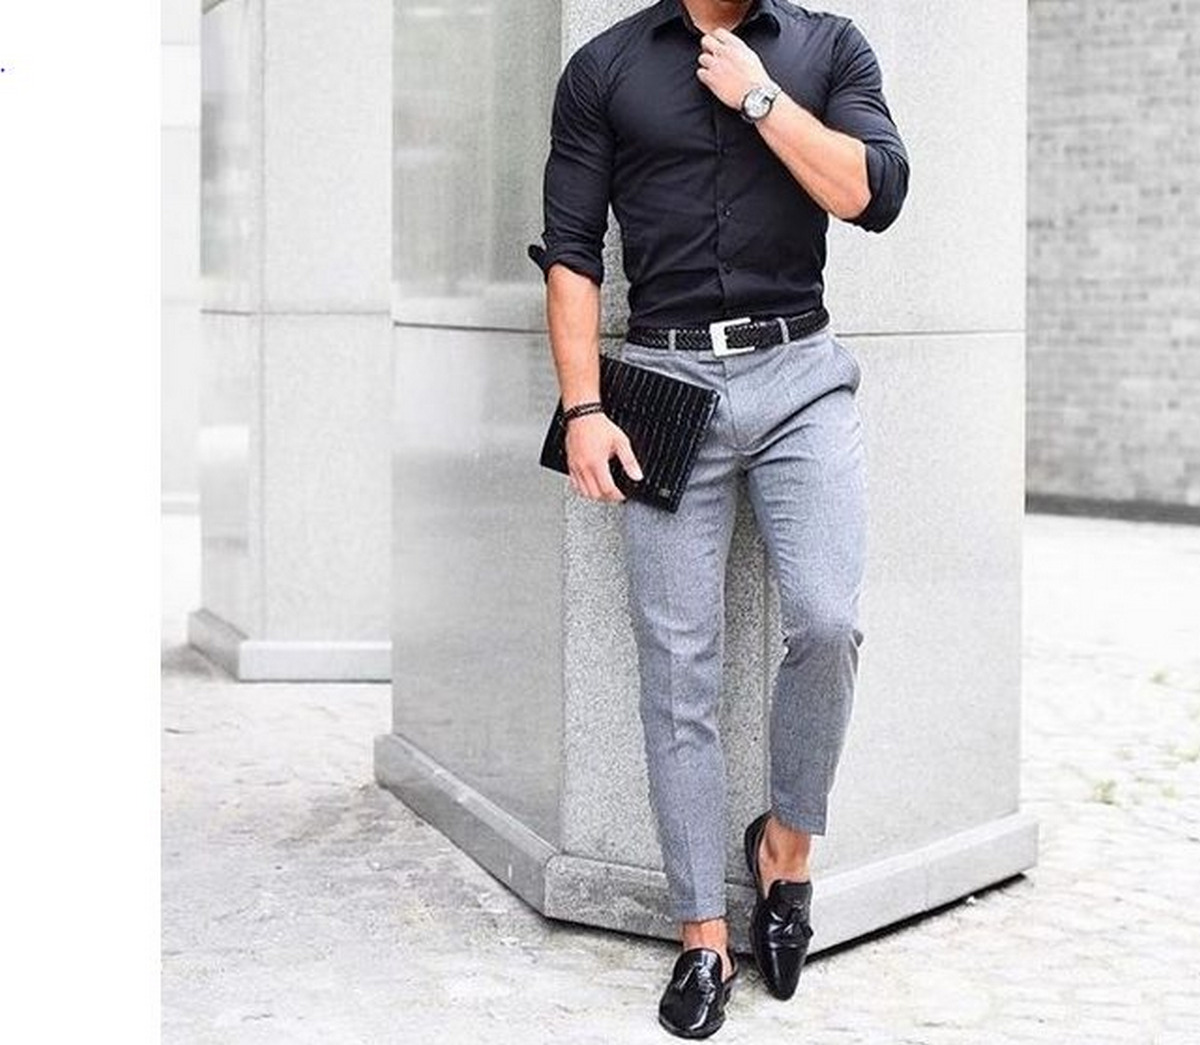 Black Shirt And Gray Pants For Men